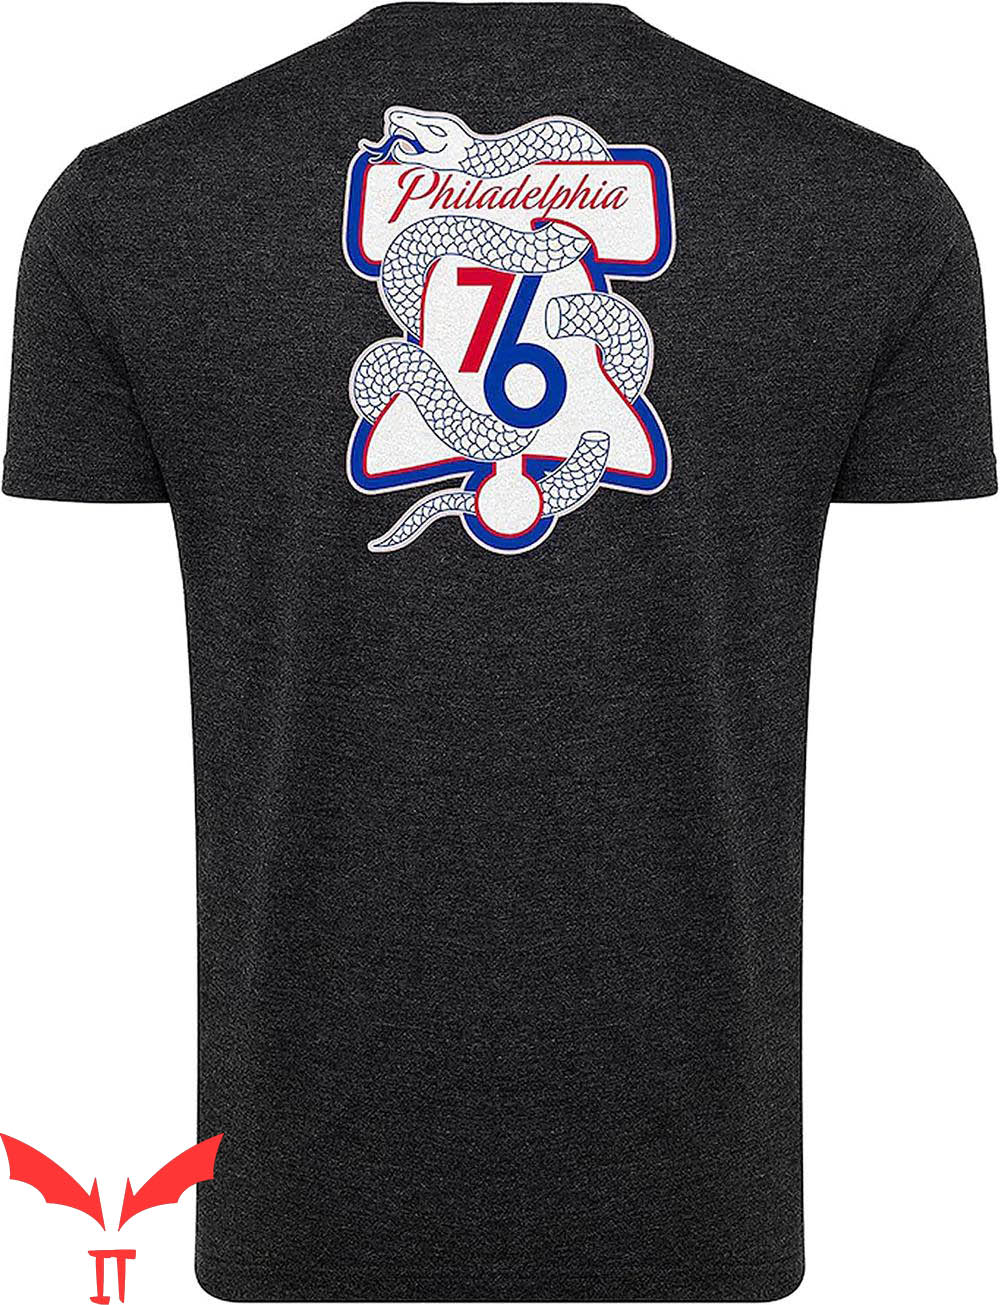 Vintage 76ers T-Shirt NBA Philadelphia 76ers Sporty Tee